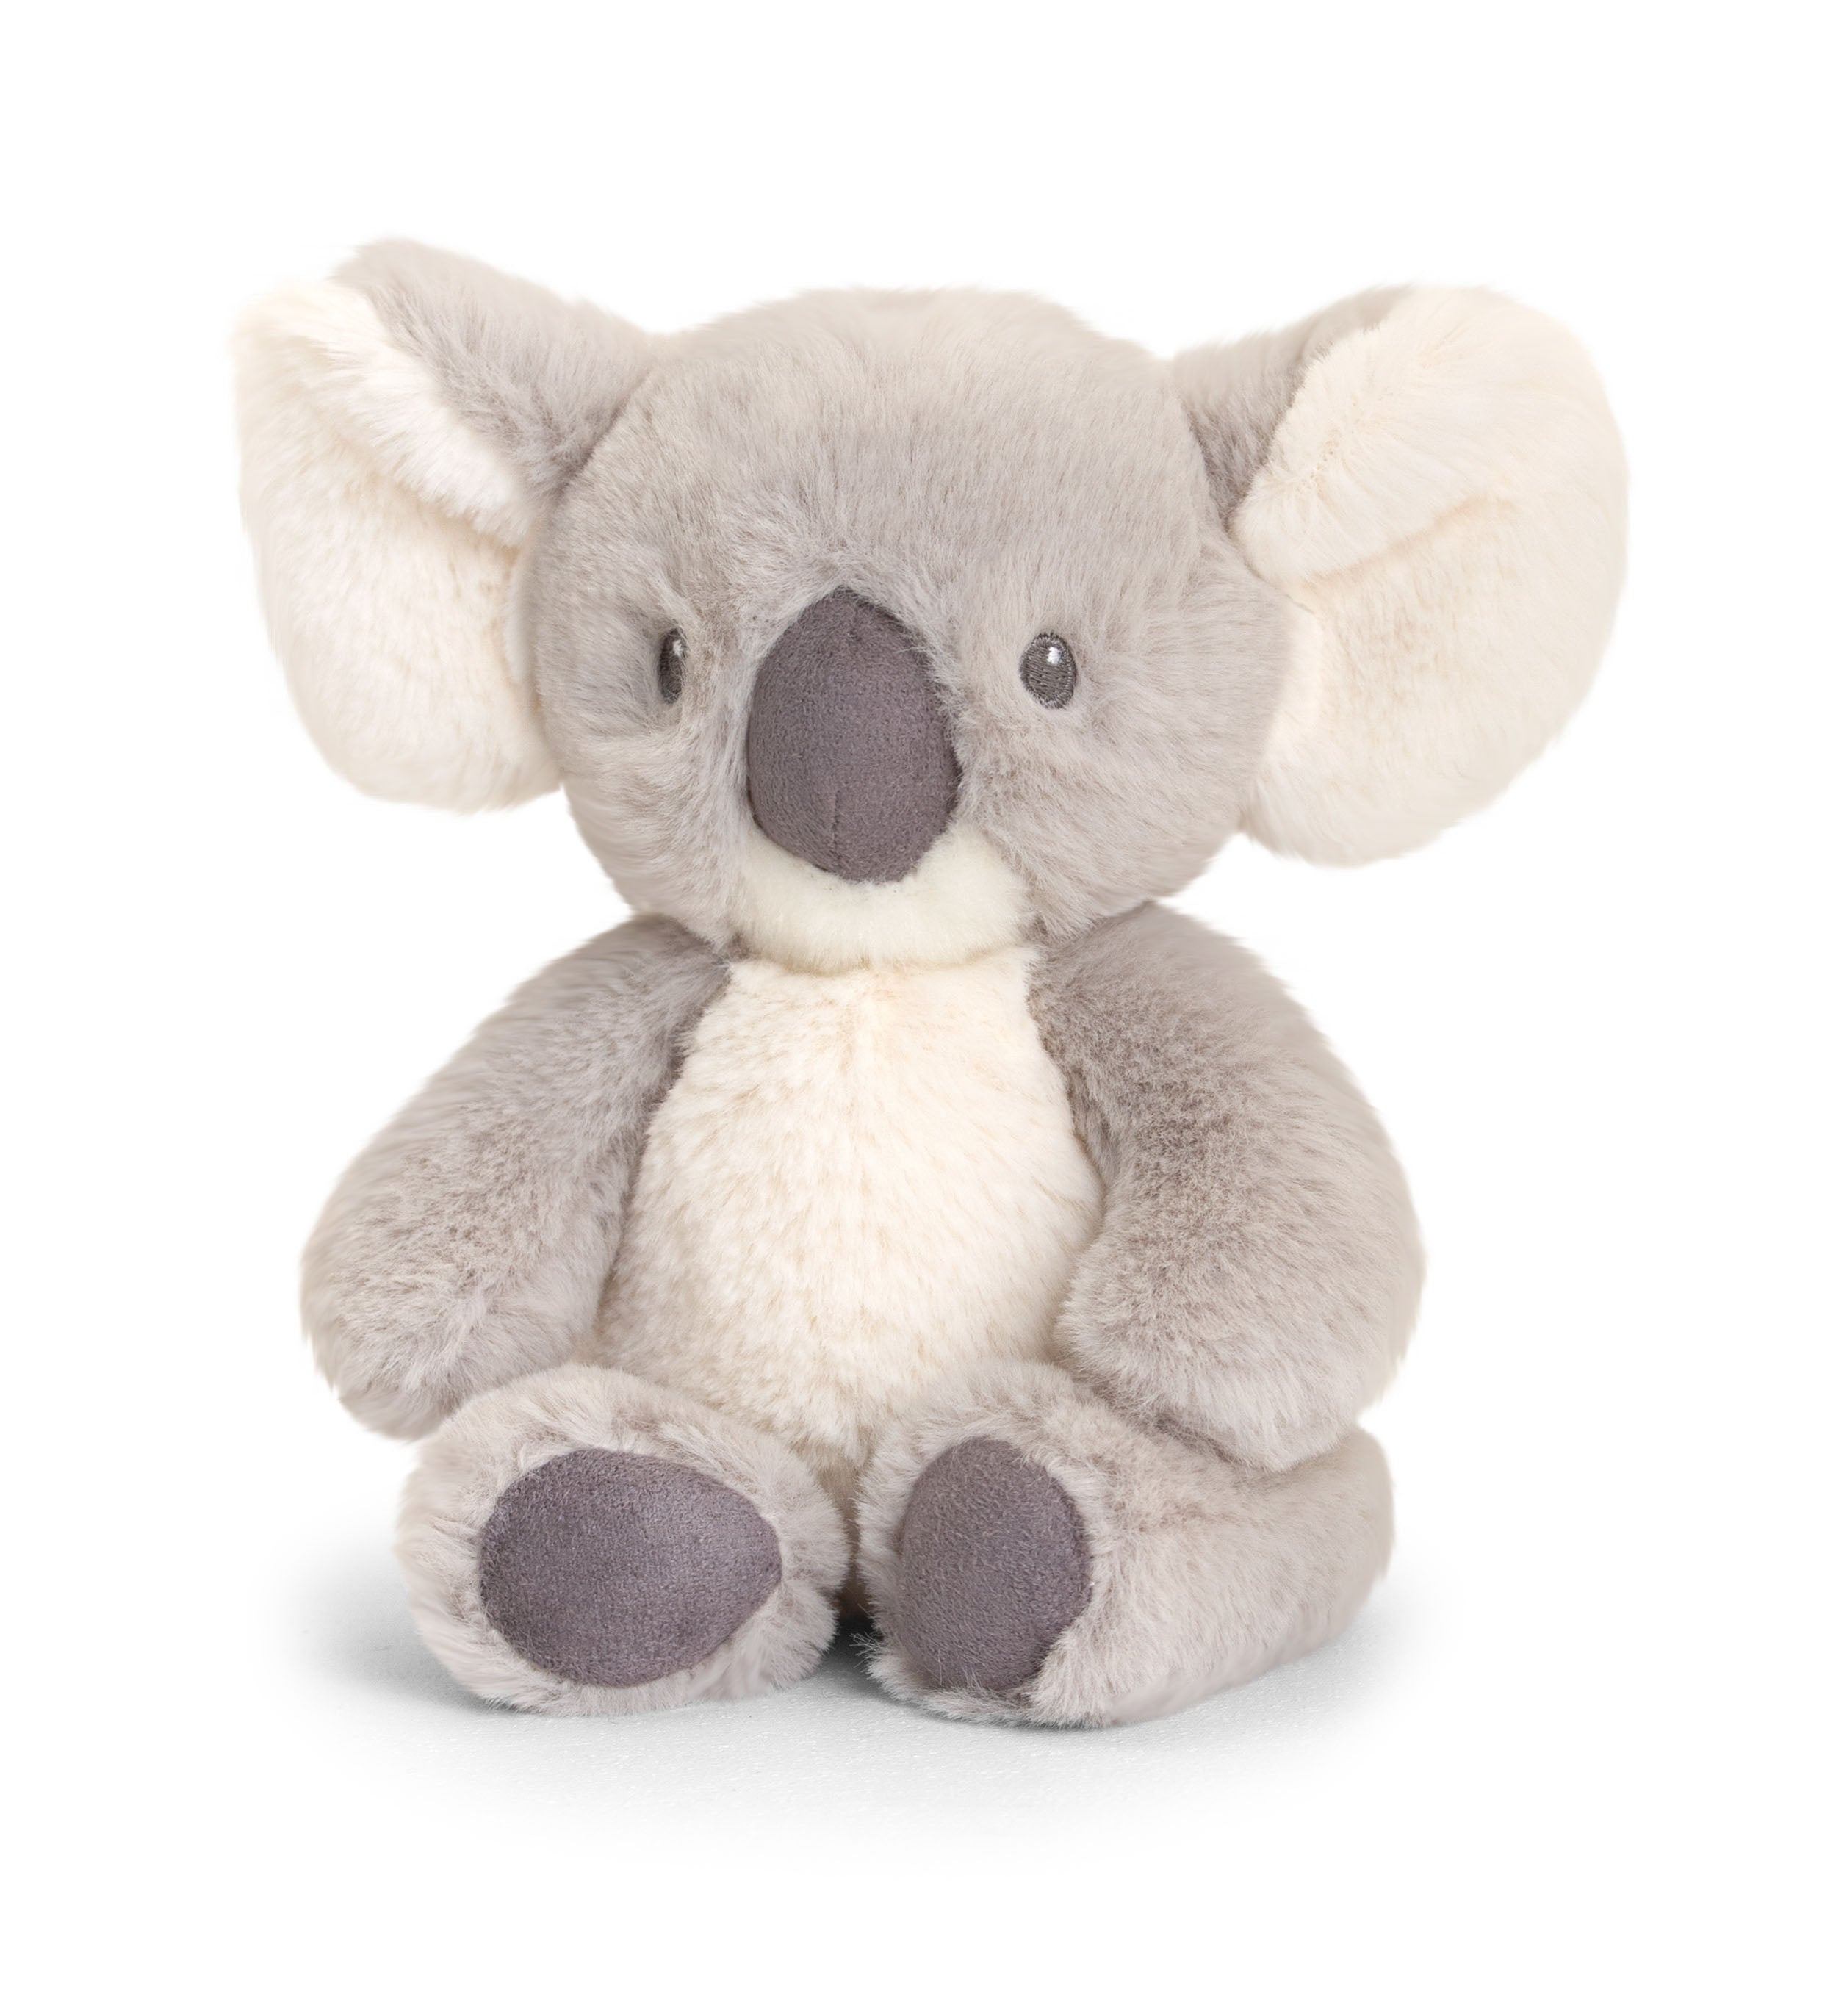 Baby Cozy Koala Soft Toy - Keel Toys - 14cm